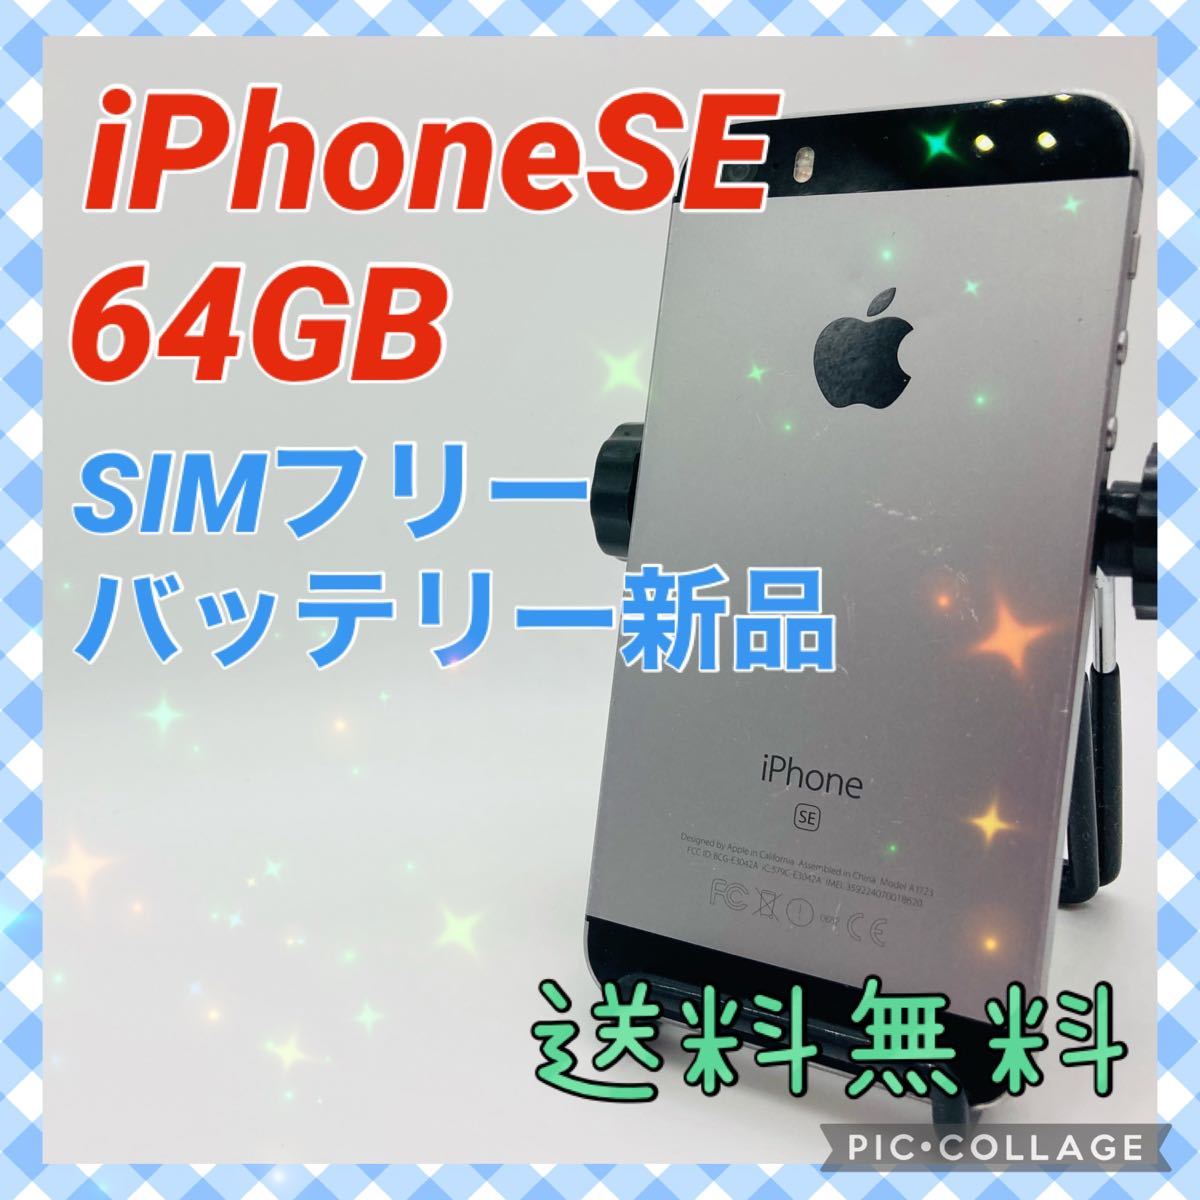 iPhone SE Space Gray 64 GB SIMフリー（¥13,500） fodexpo.com.co